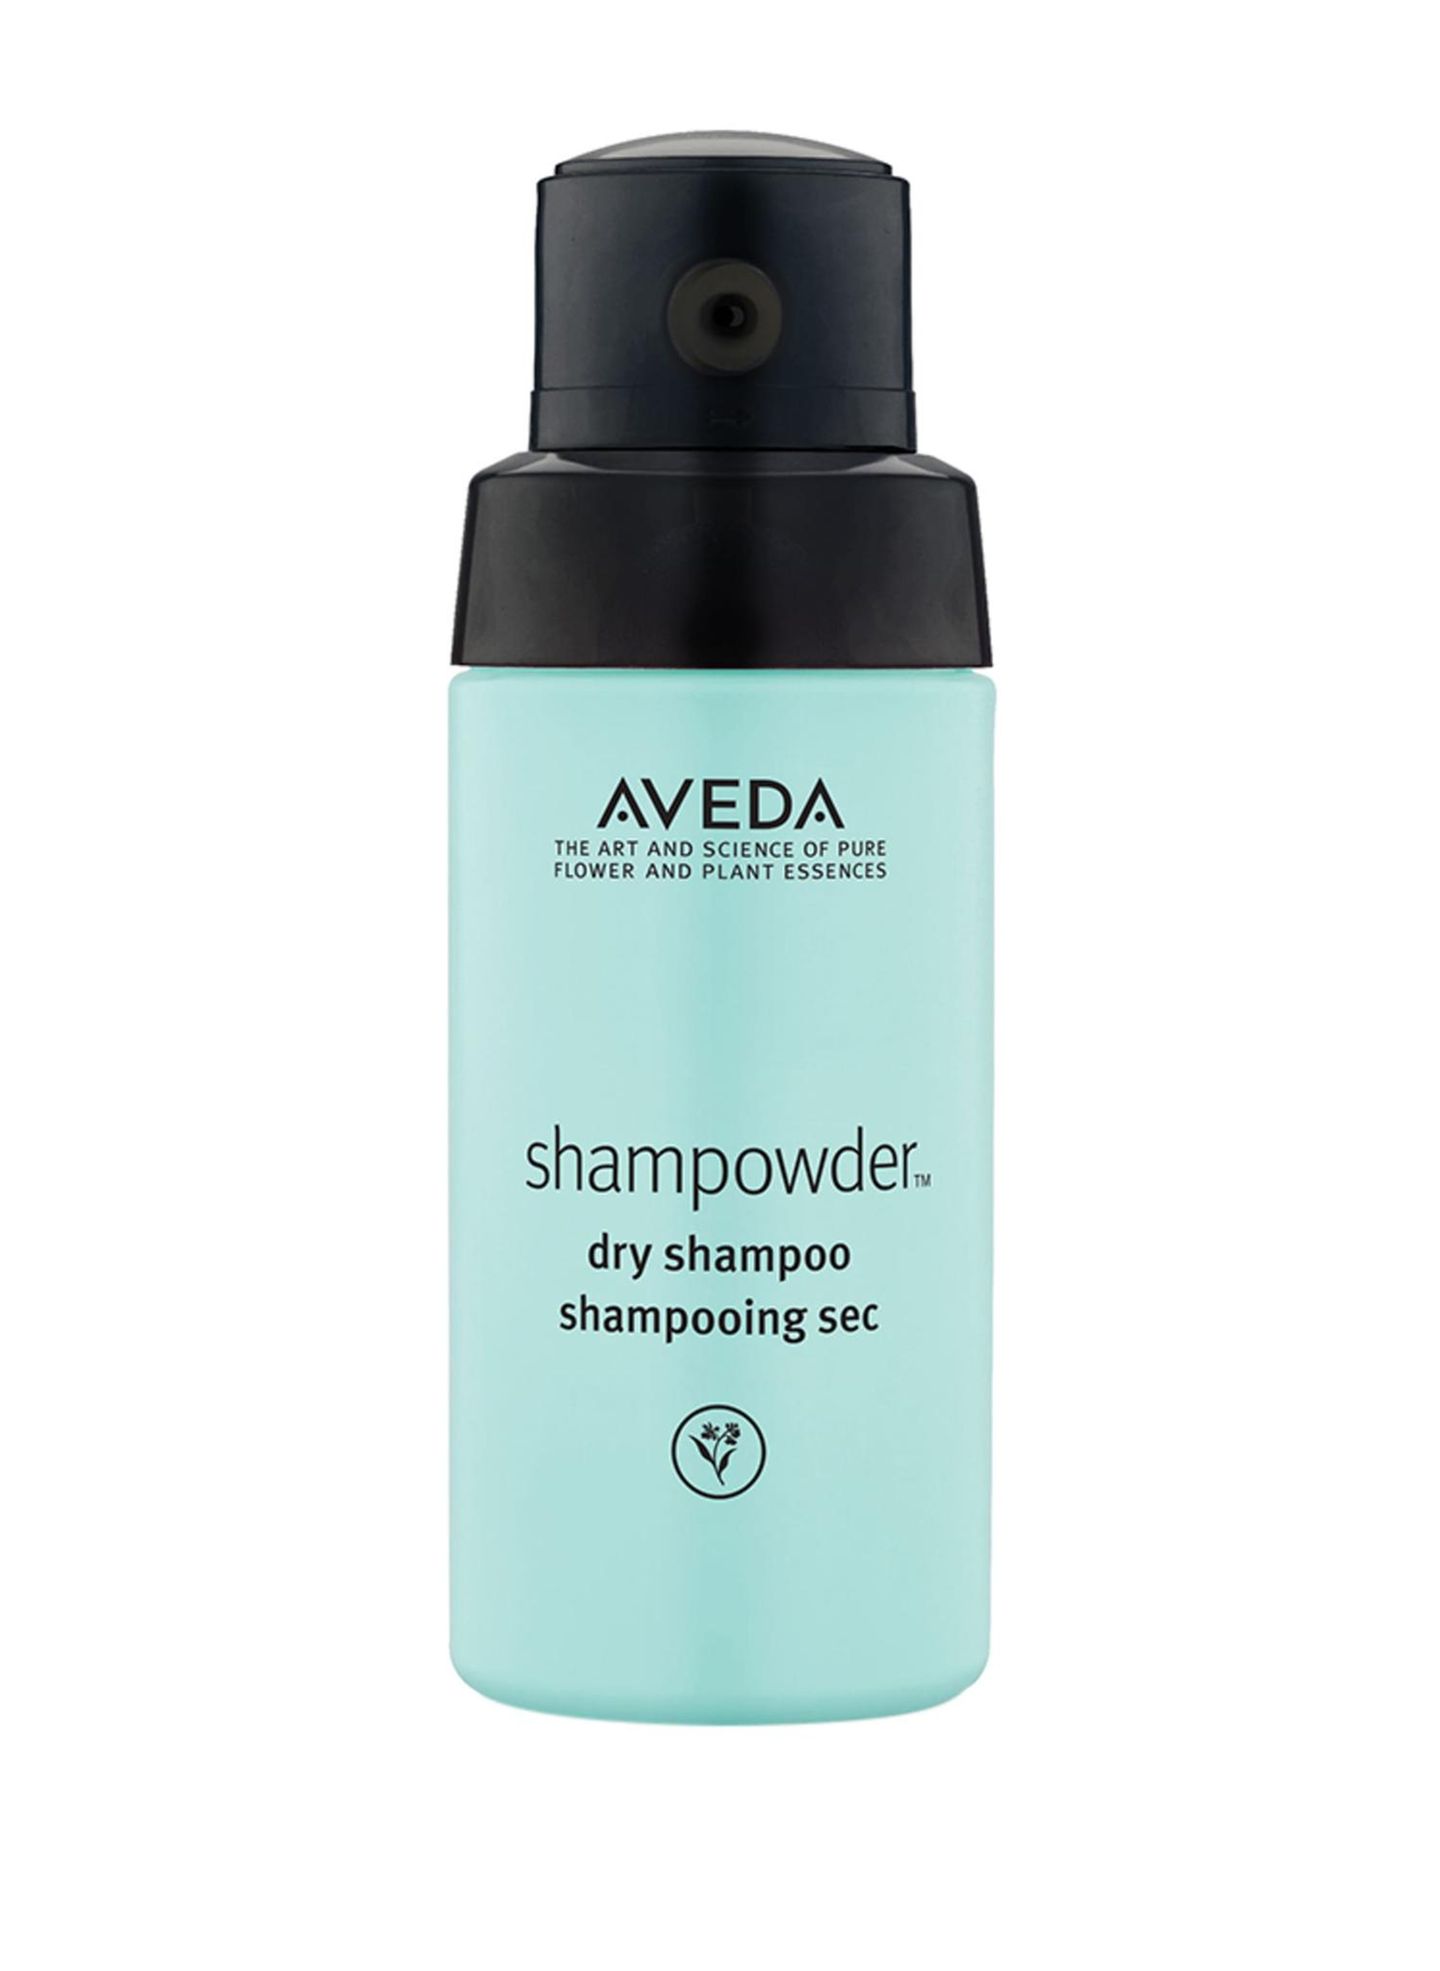 "Shampowder Dry Shampoo" von Aveda, ca. 32 Euro